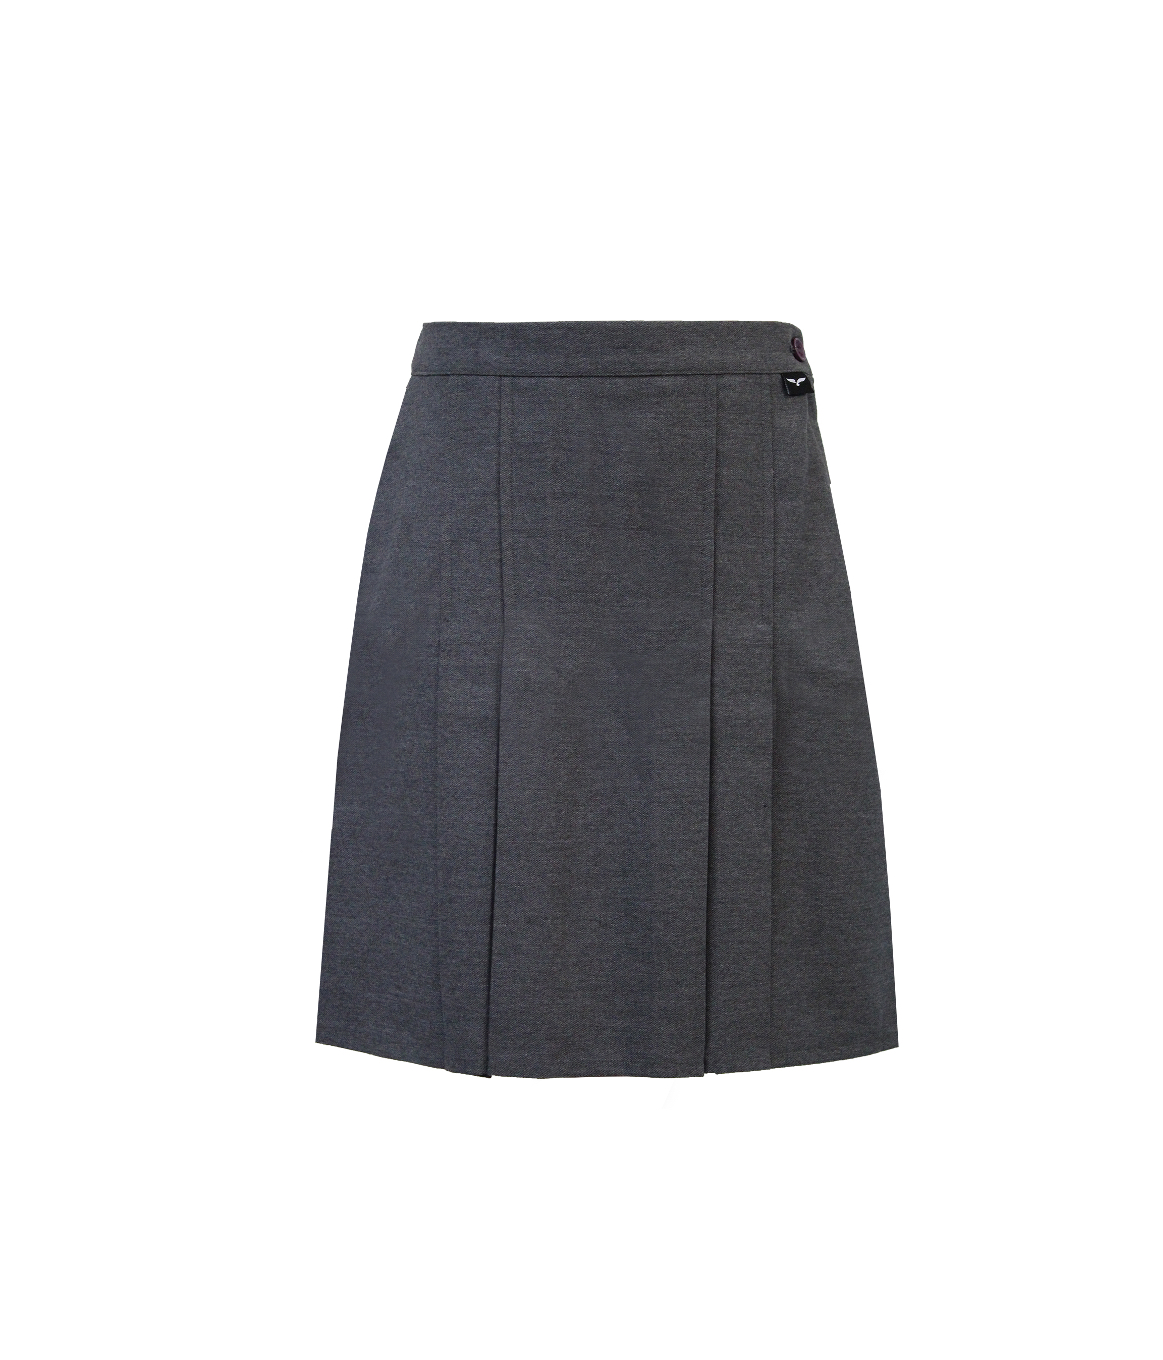 Grey Primary School Girl's Skirt (T22 Junior) - Quality Schoolwear